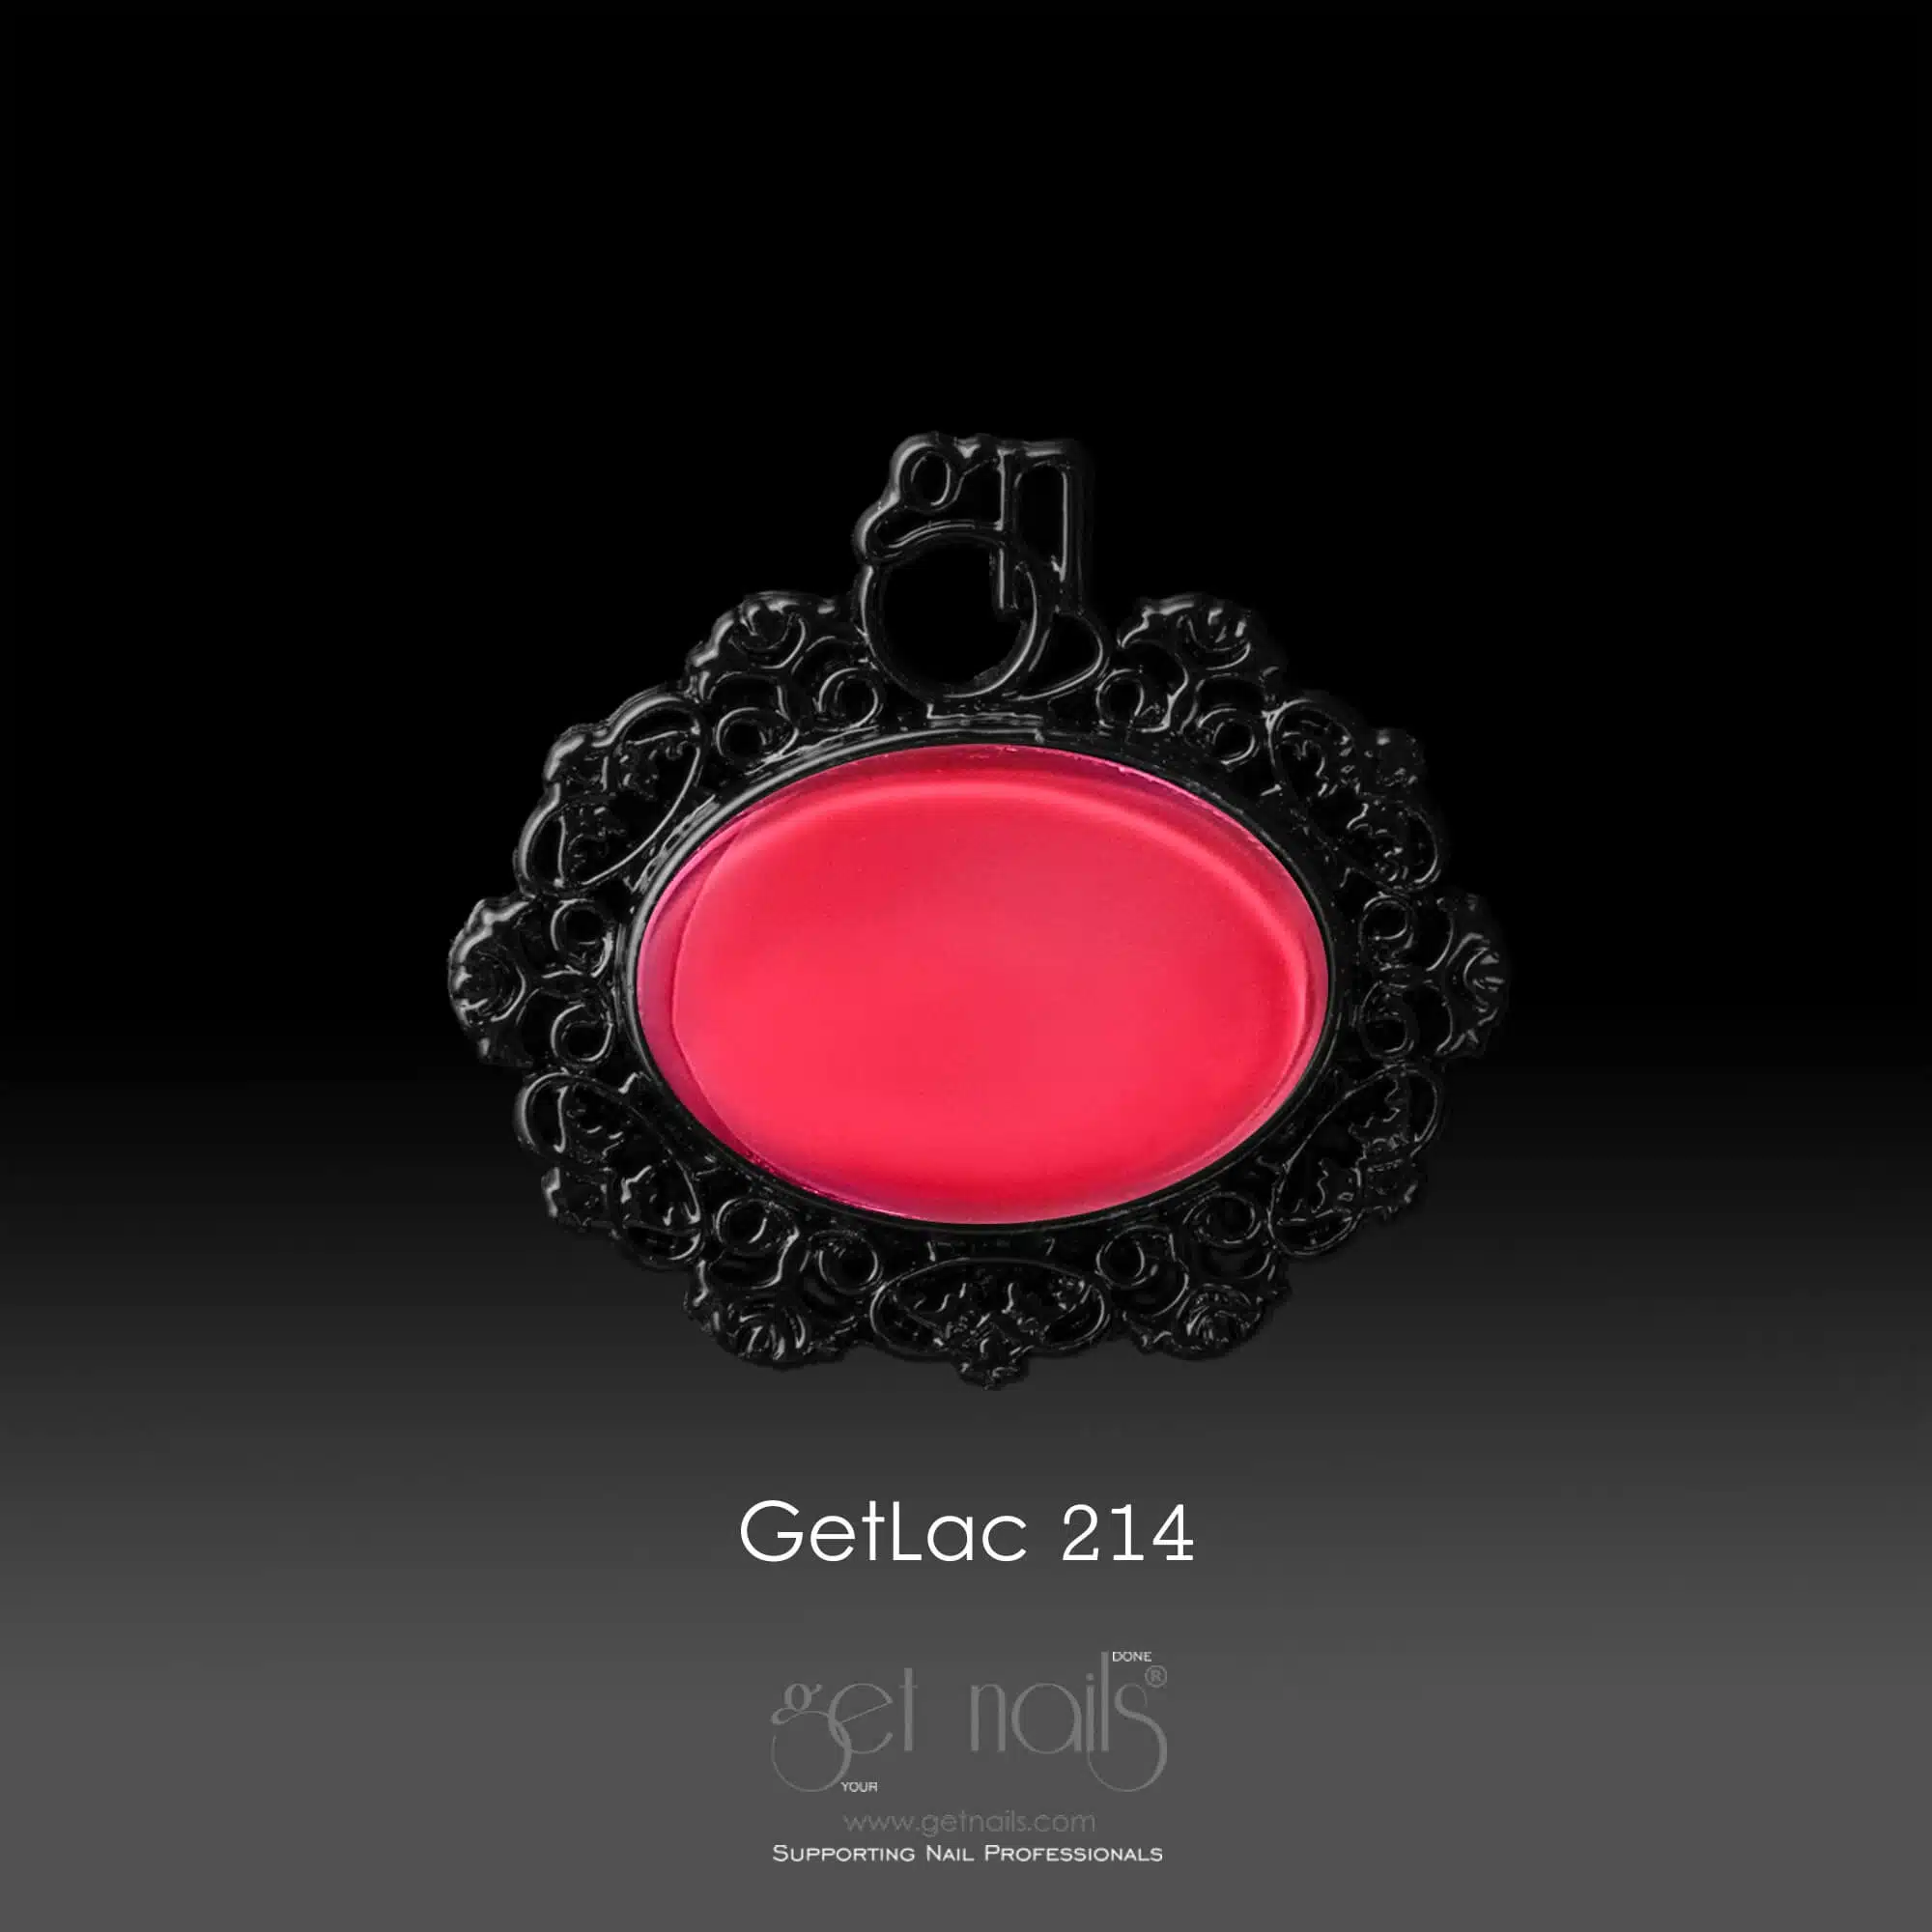 Get Nails Austria - GetLac 214 15 g